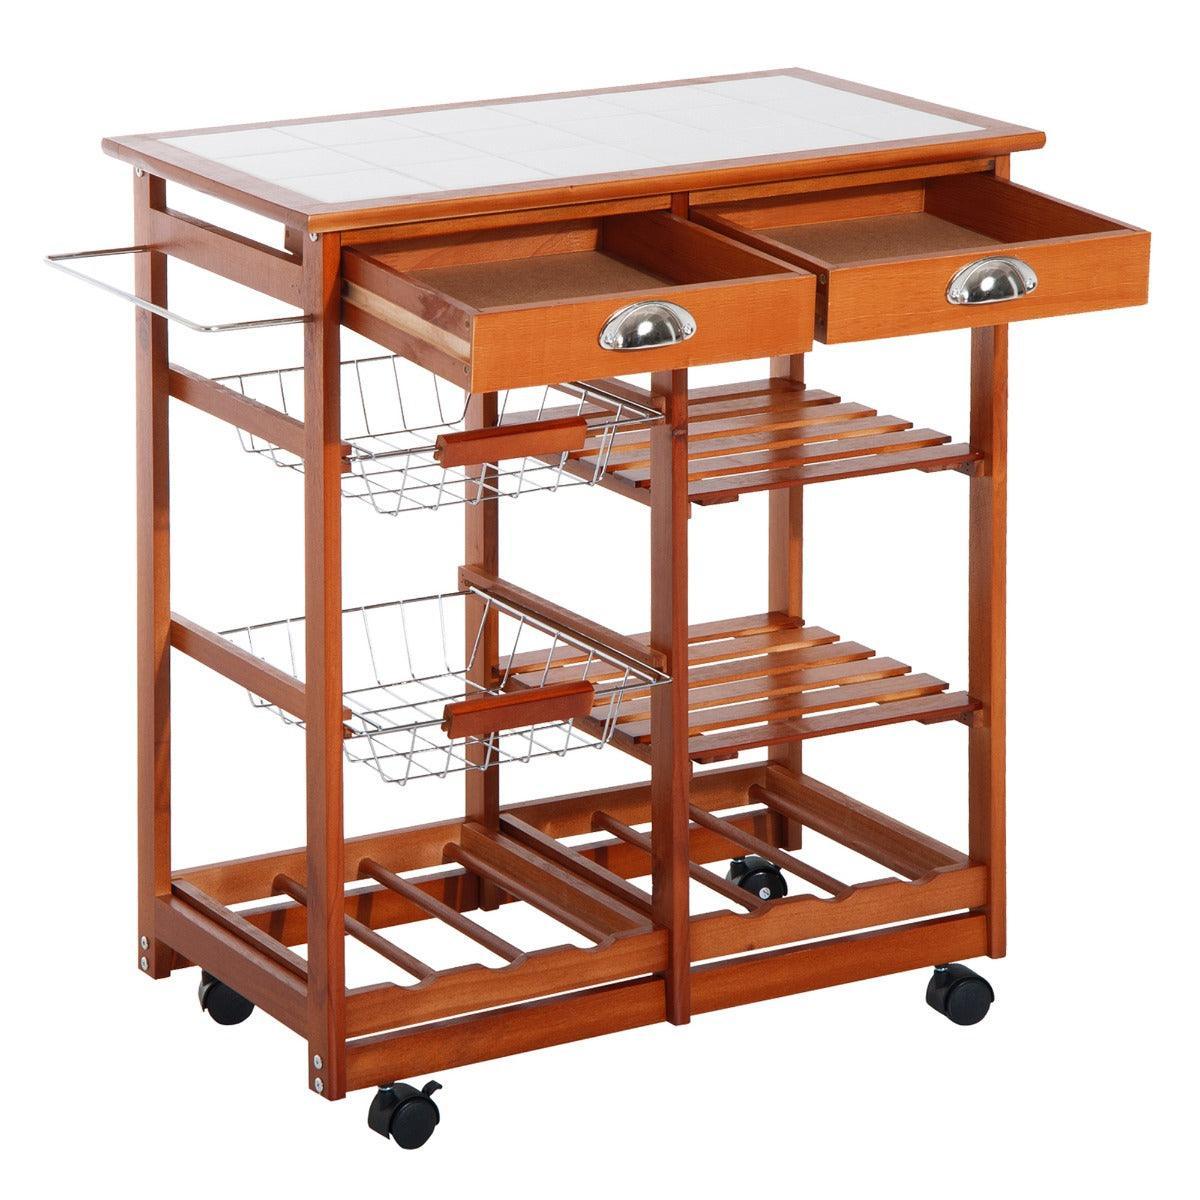 HOMCOM Wooden Kitchen Trolley Cart with Drawers - 3 Shelves - ALL4U RETAILER LTD